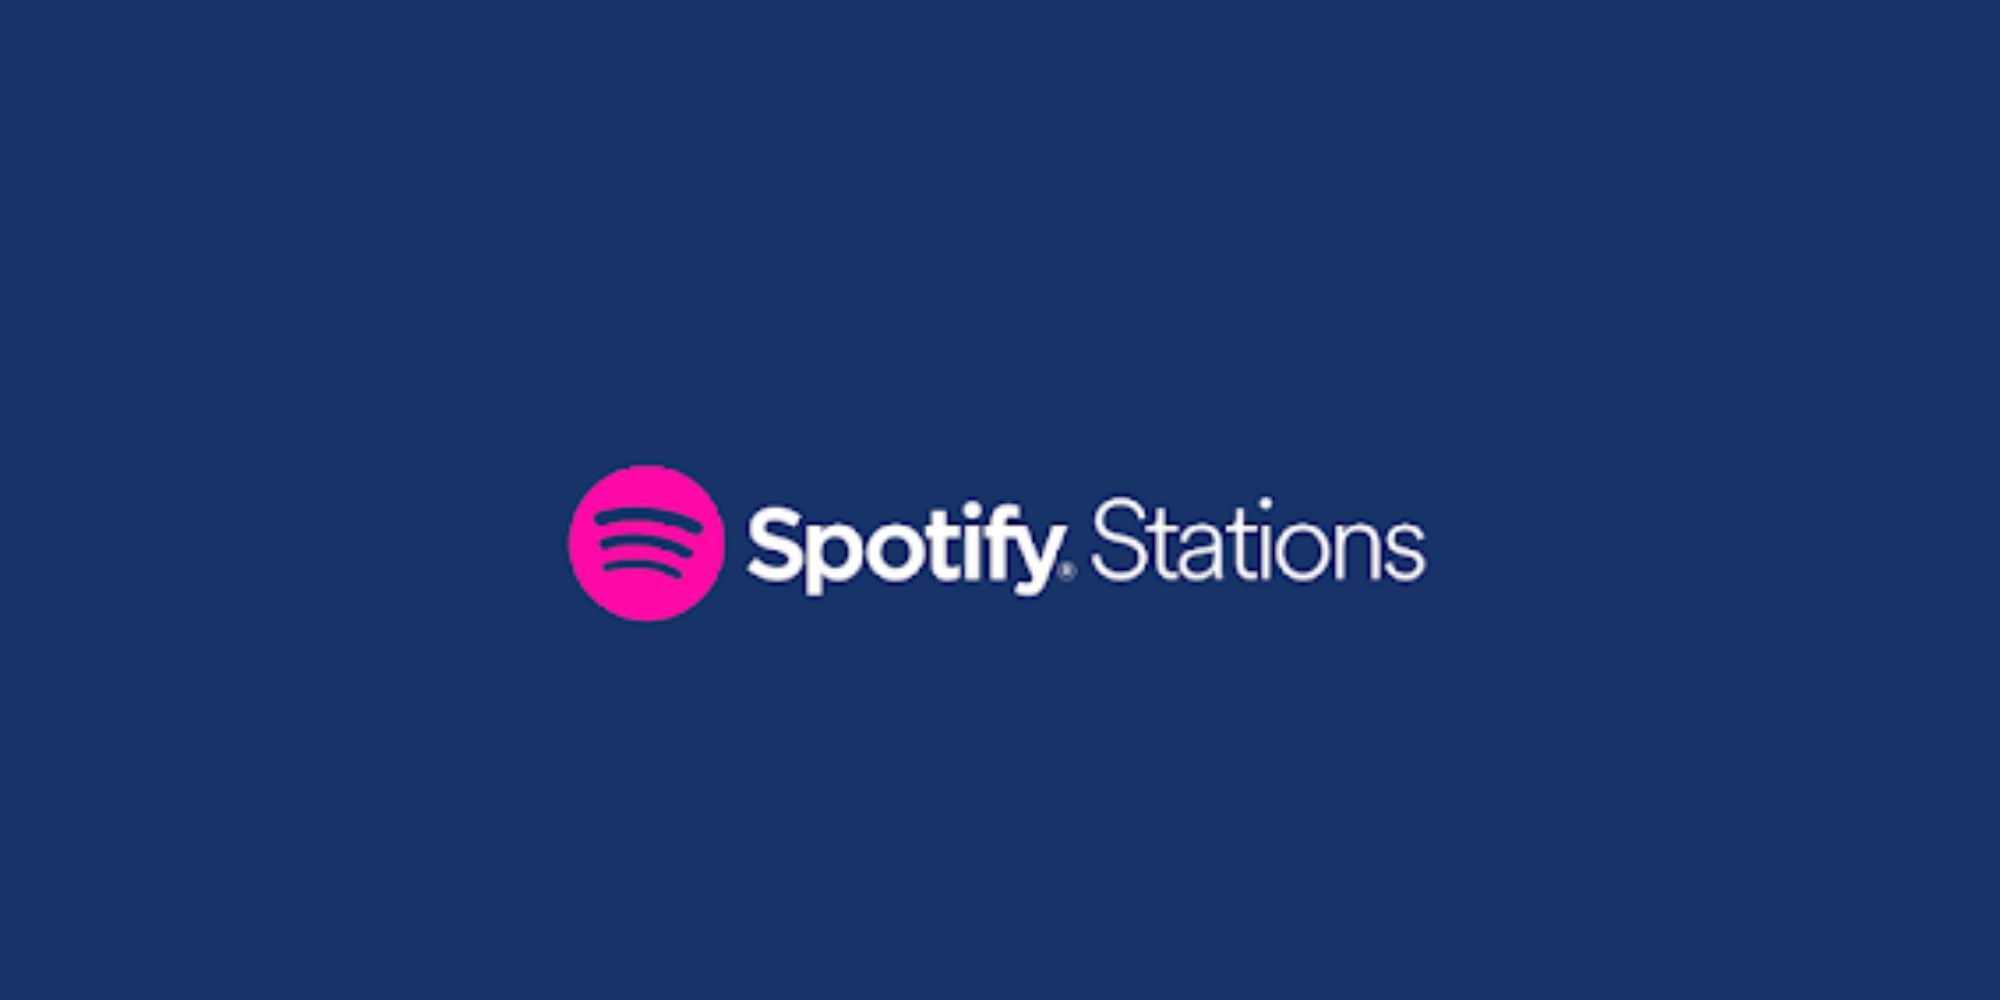 spotify stations logo